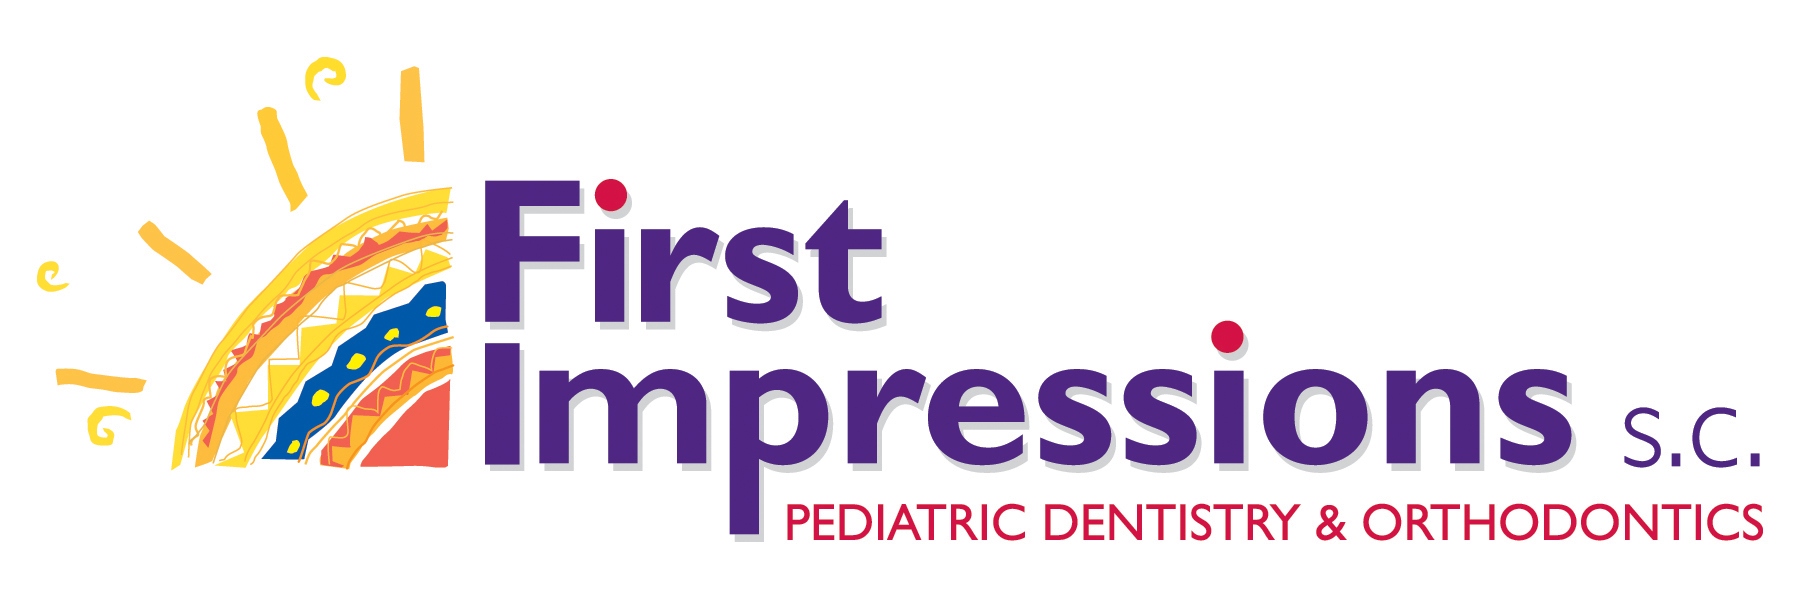 First Impressions Pediatric Dentistry and Orthodontics logo